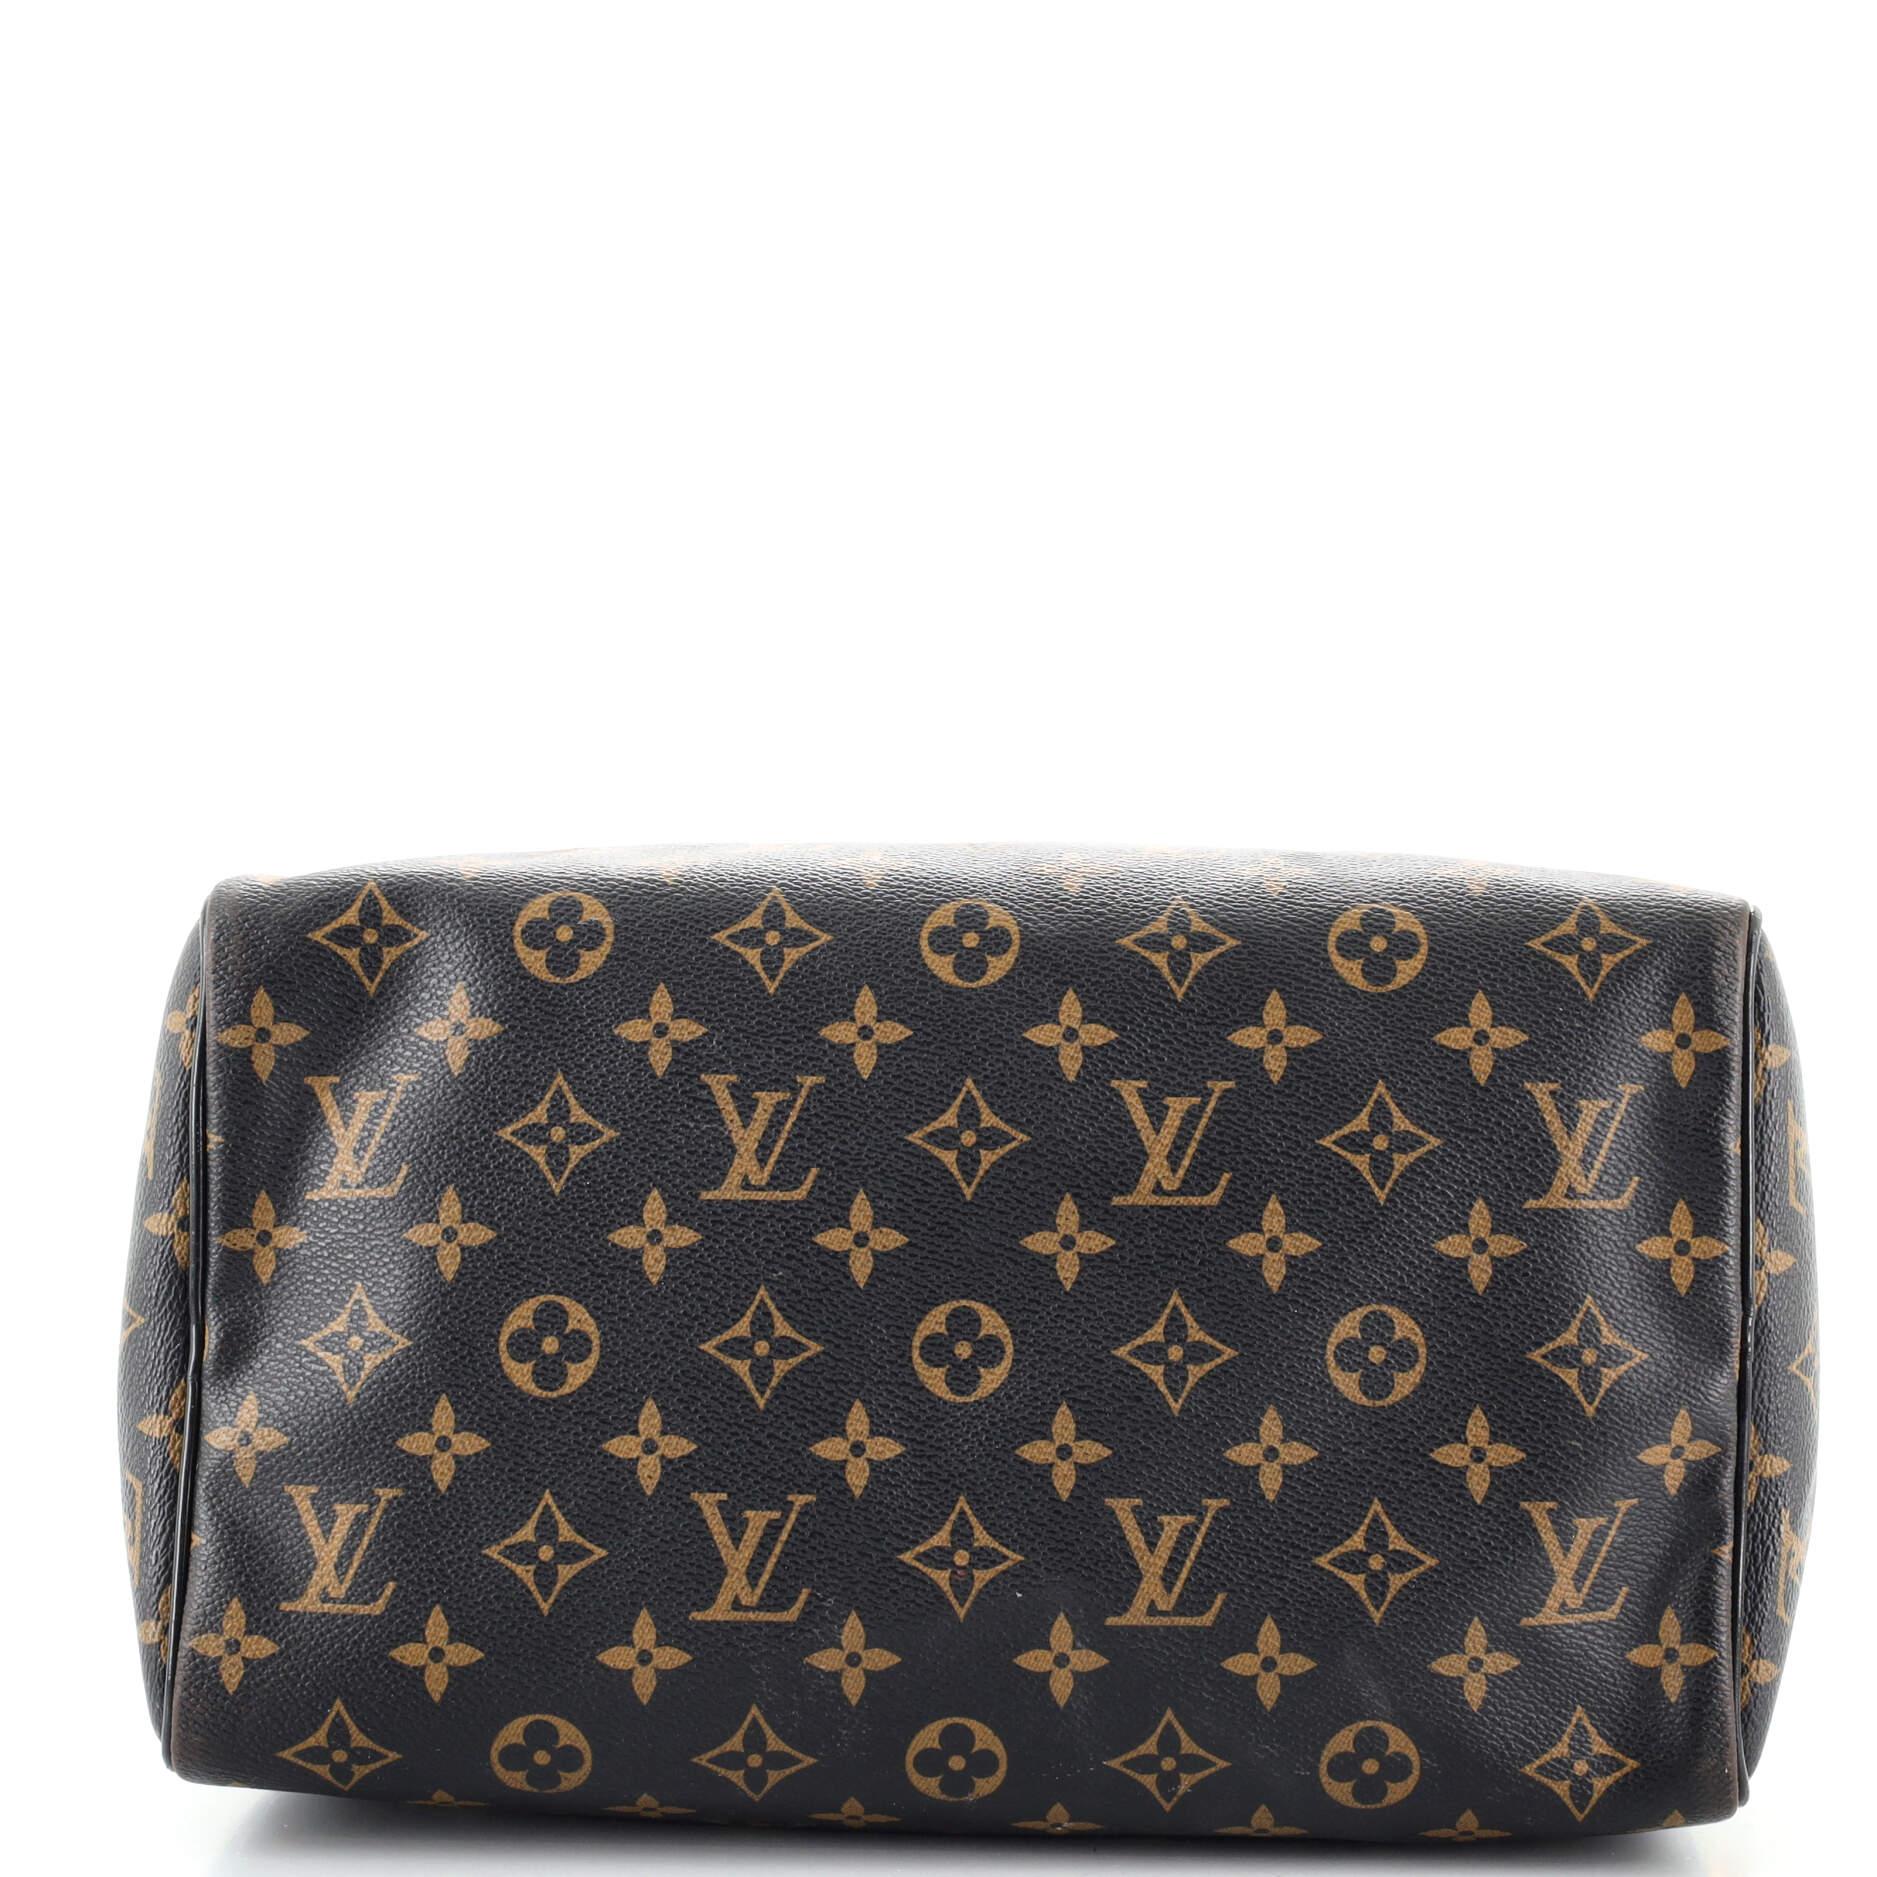 Women's or Men's Louis Vuitton Speedy Handbag Limited Edition Monogram Mirage 30